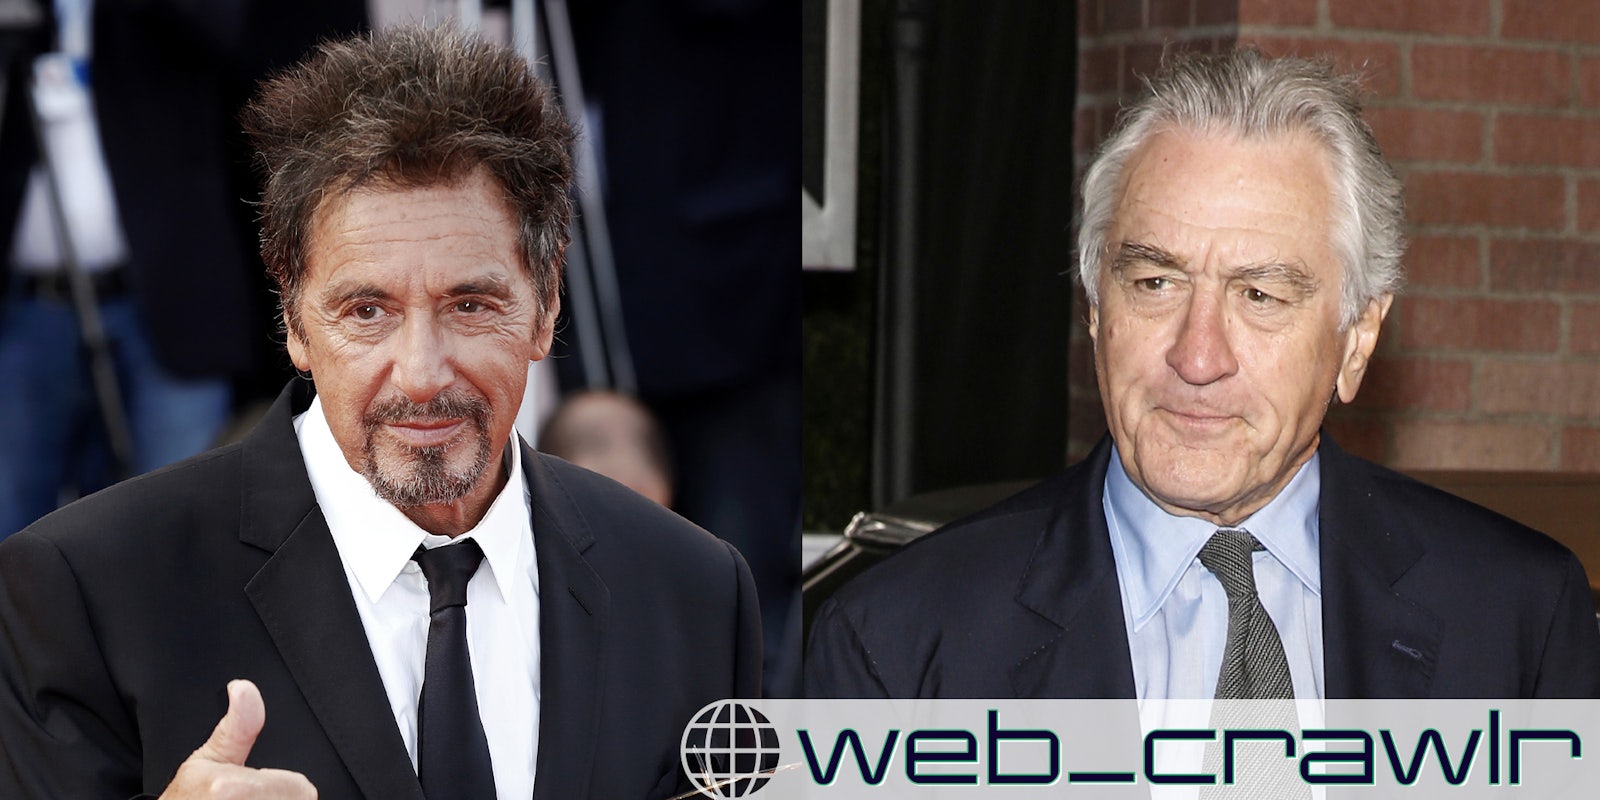 Al Pacino and Robert De Niro. The Daily Dot newsletter web_crawlr logo is in the bottom right corner.